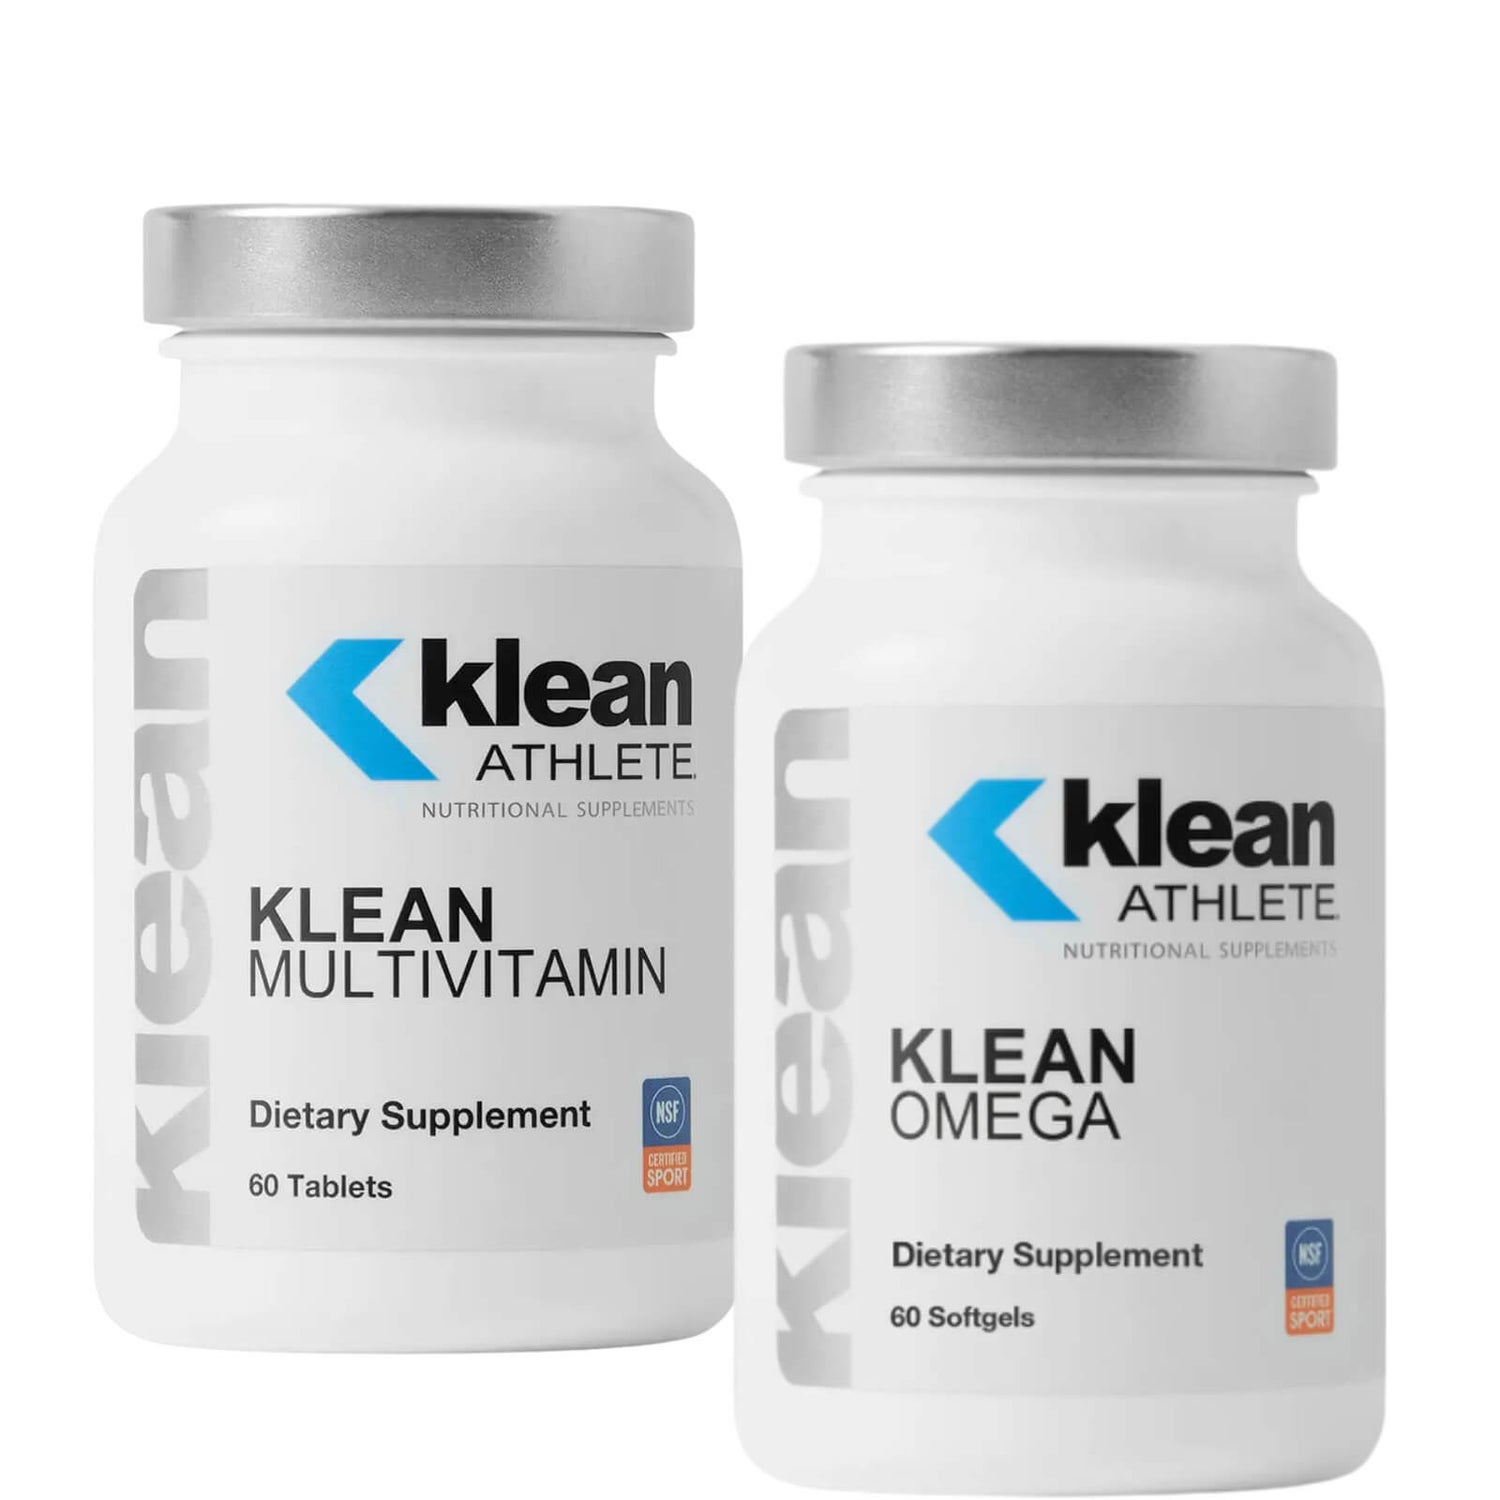 Klean Athlete Health and Wellness Bundle